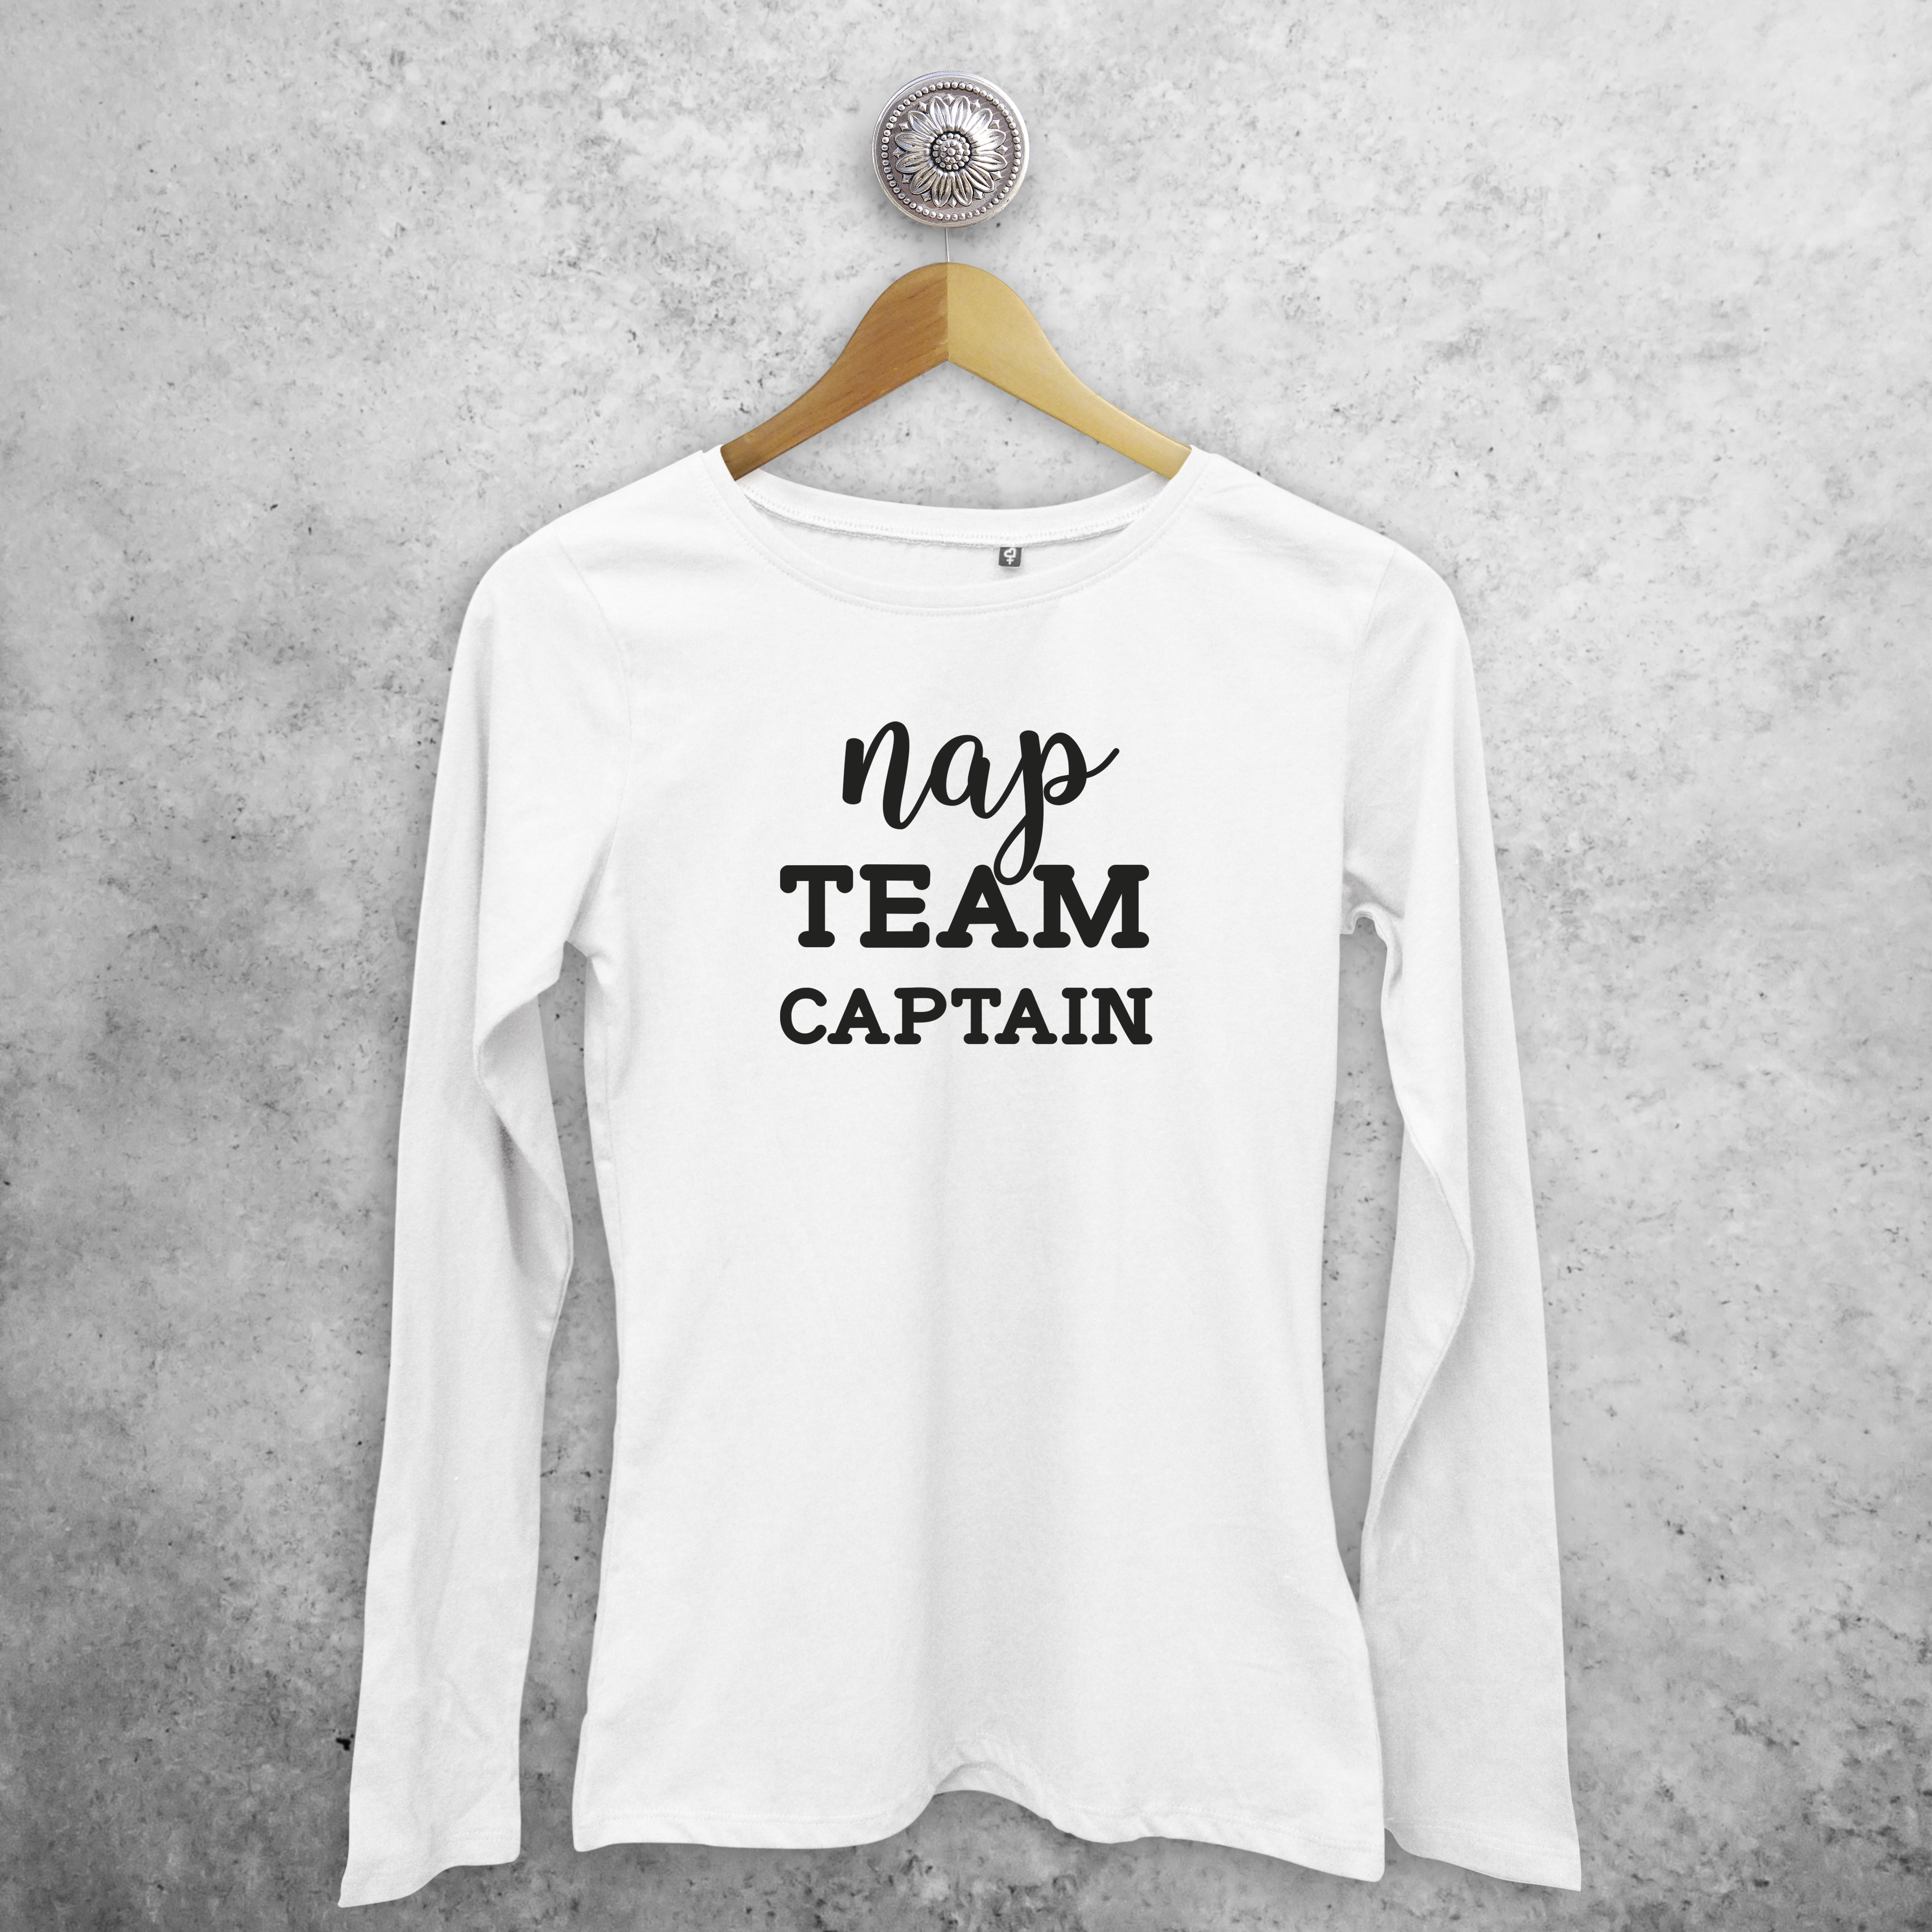 'Nap team captain' adult longsleeve shirt